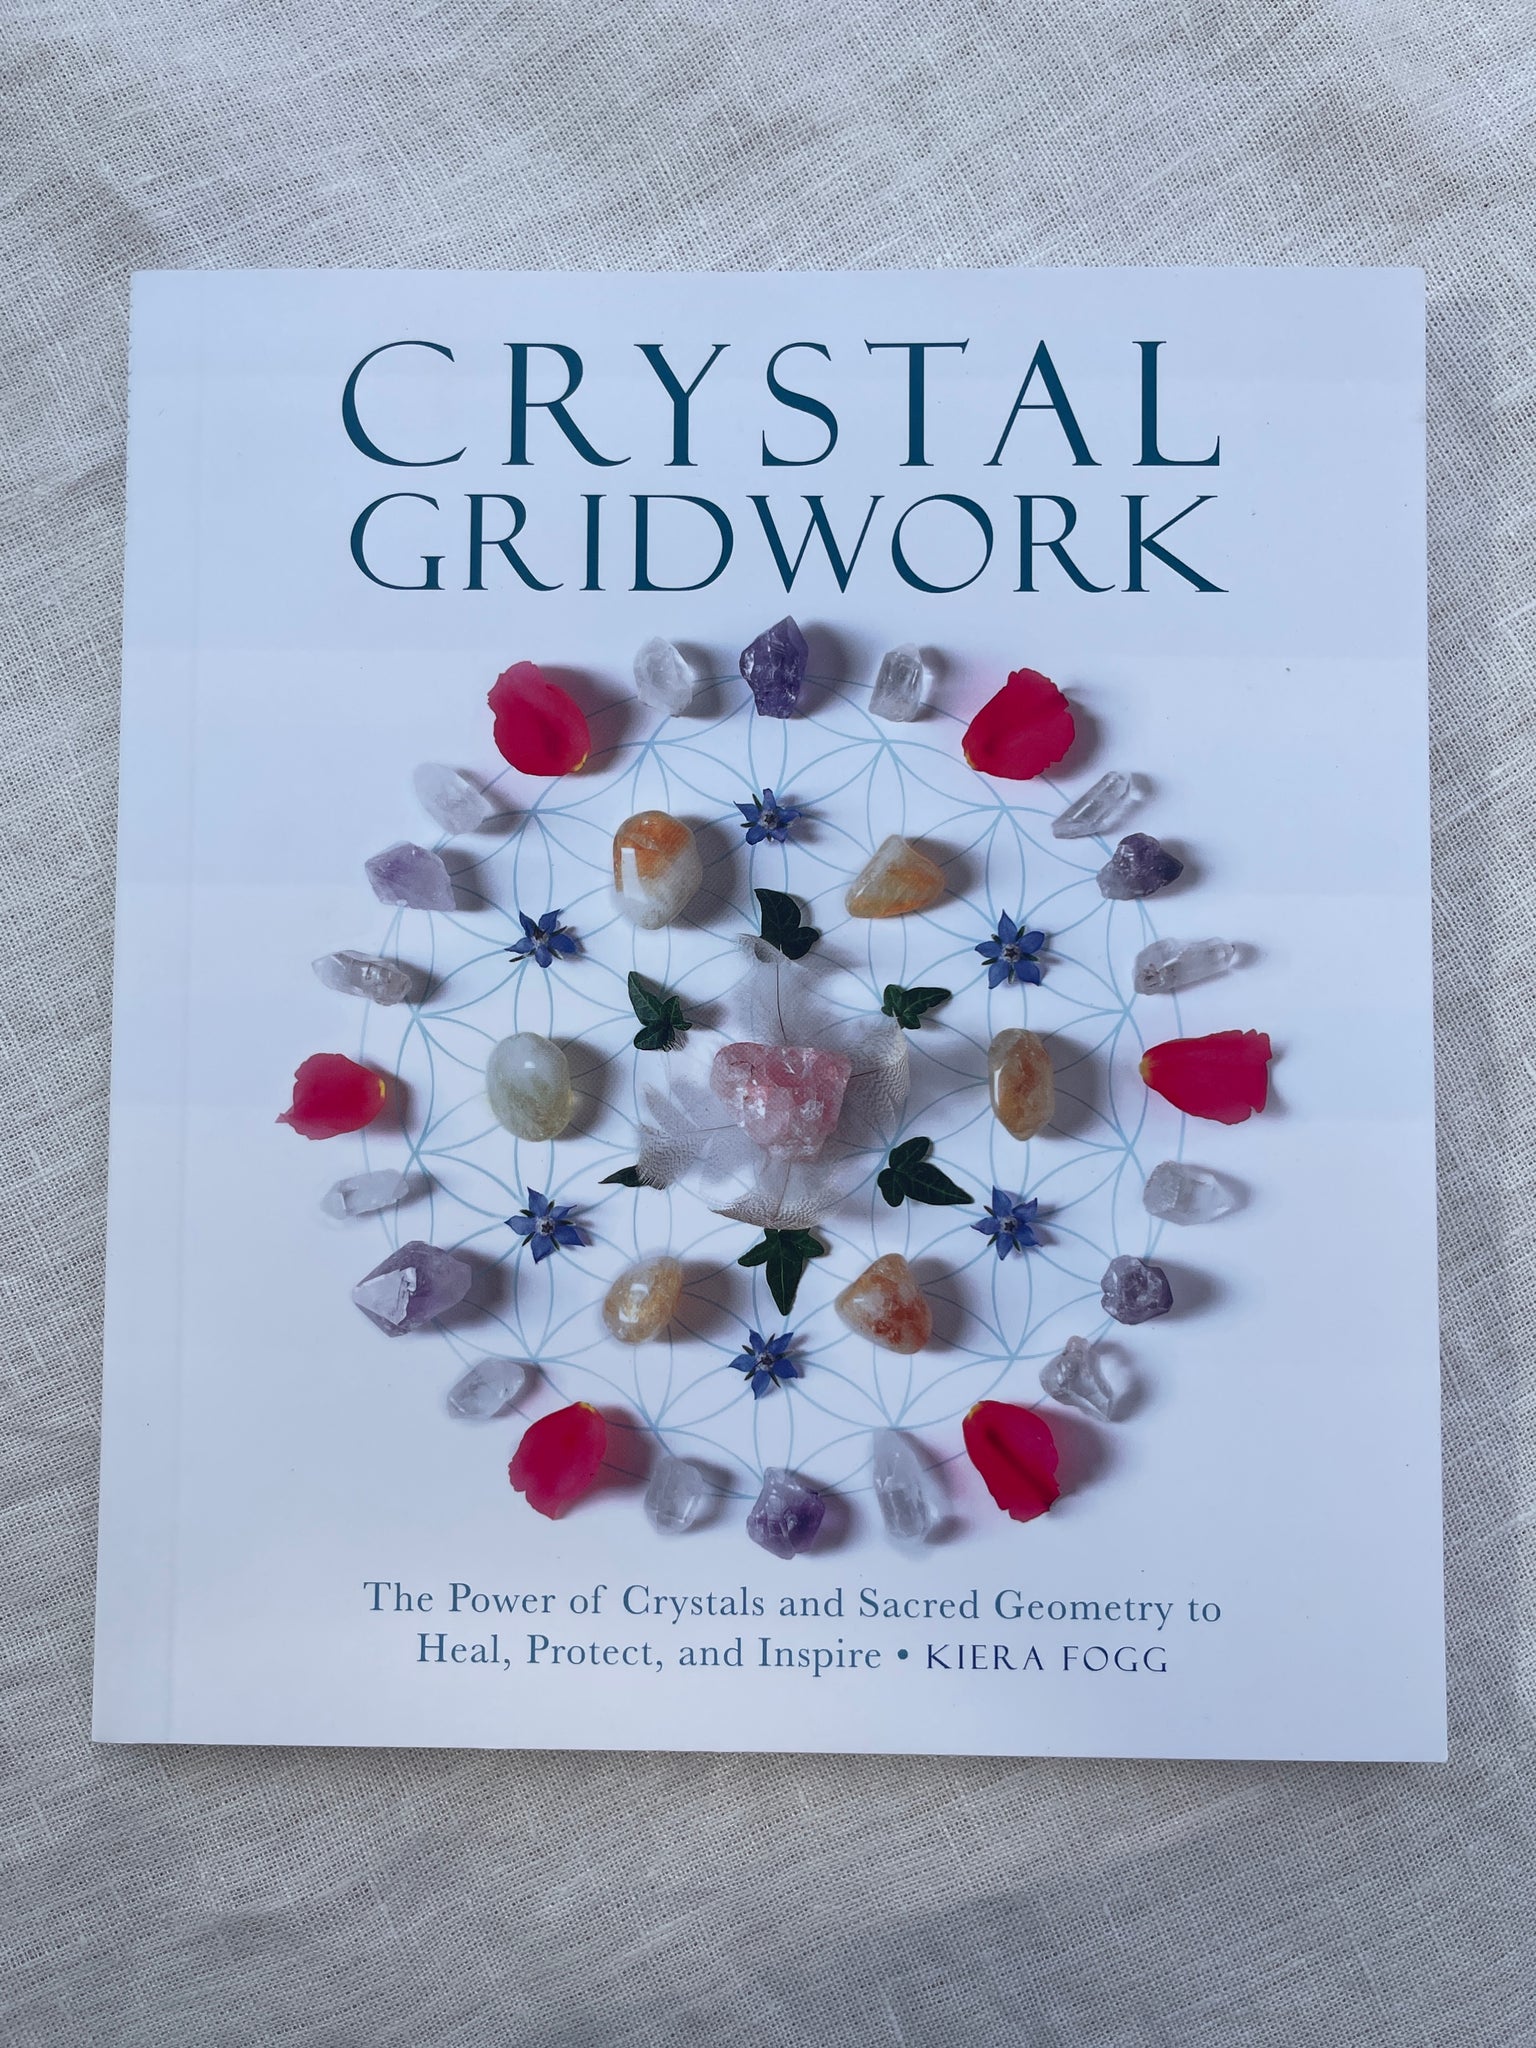 Crystal Gridwork